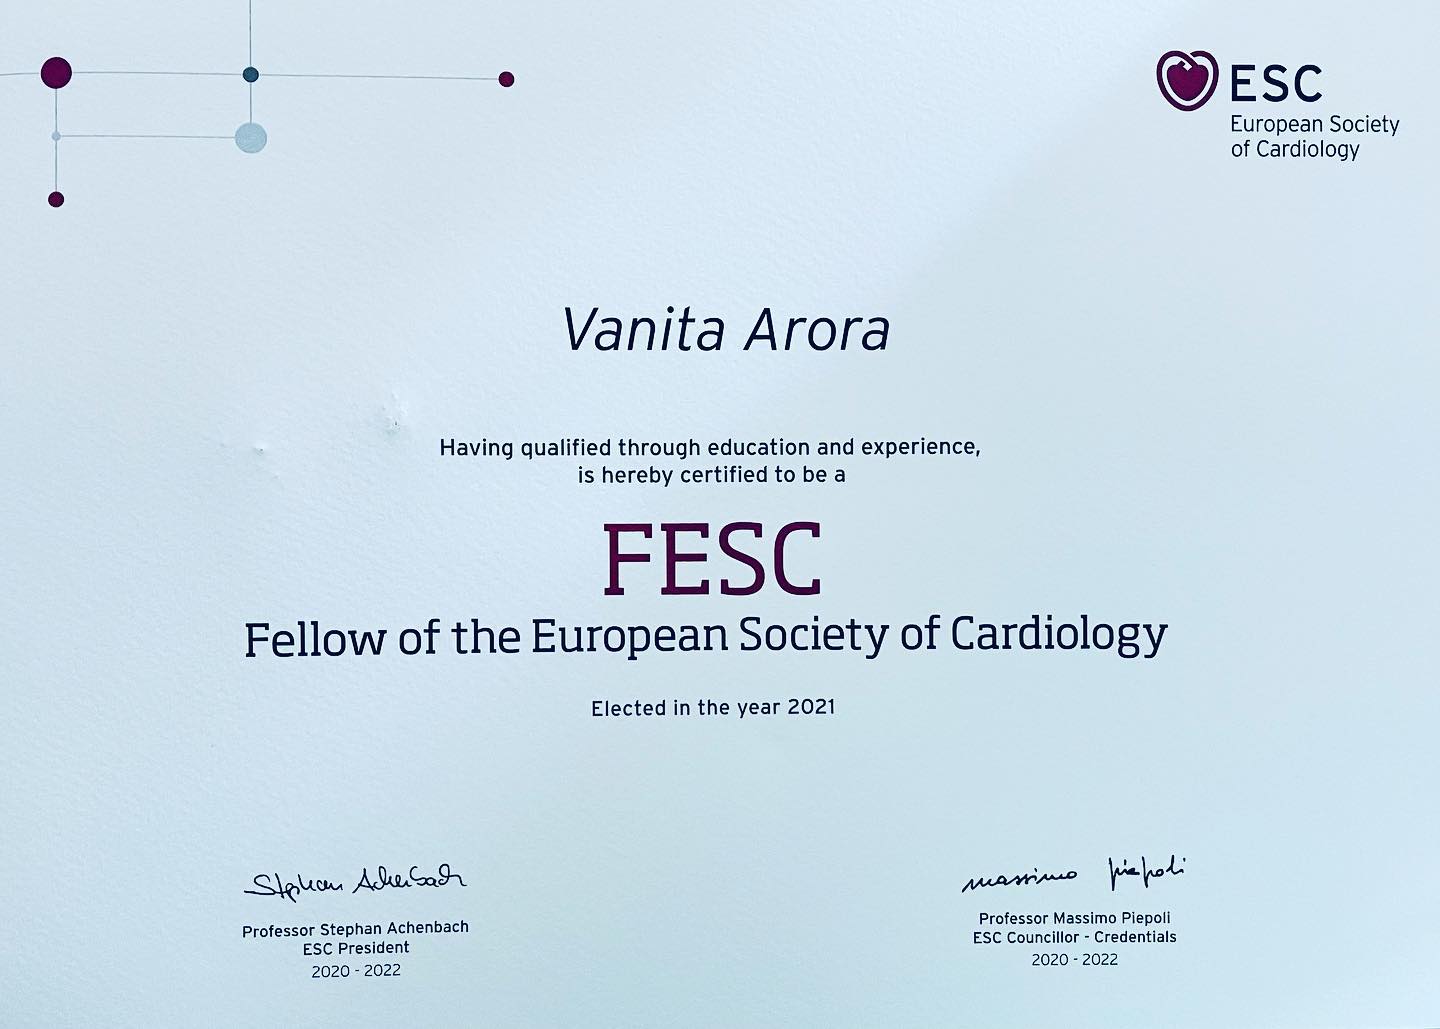 Fellowship of the European Society of Cardiology